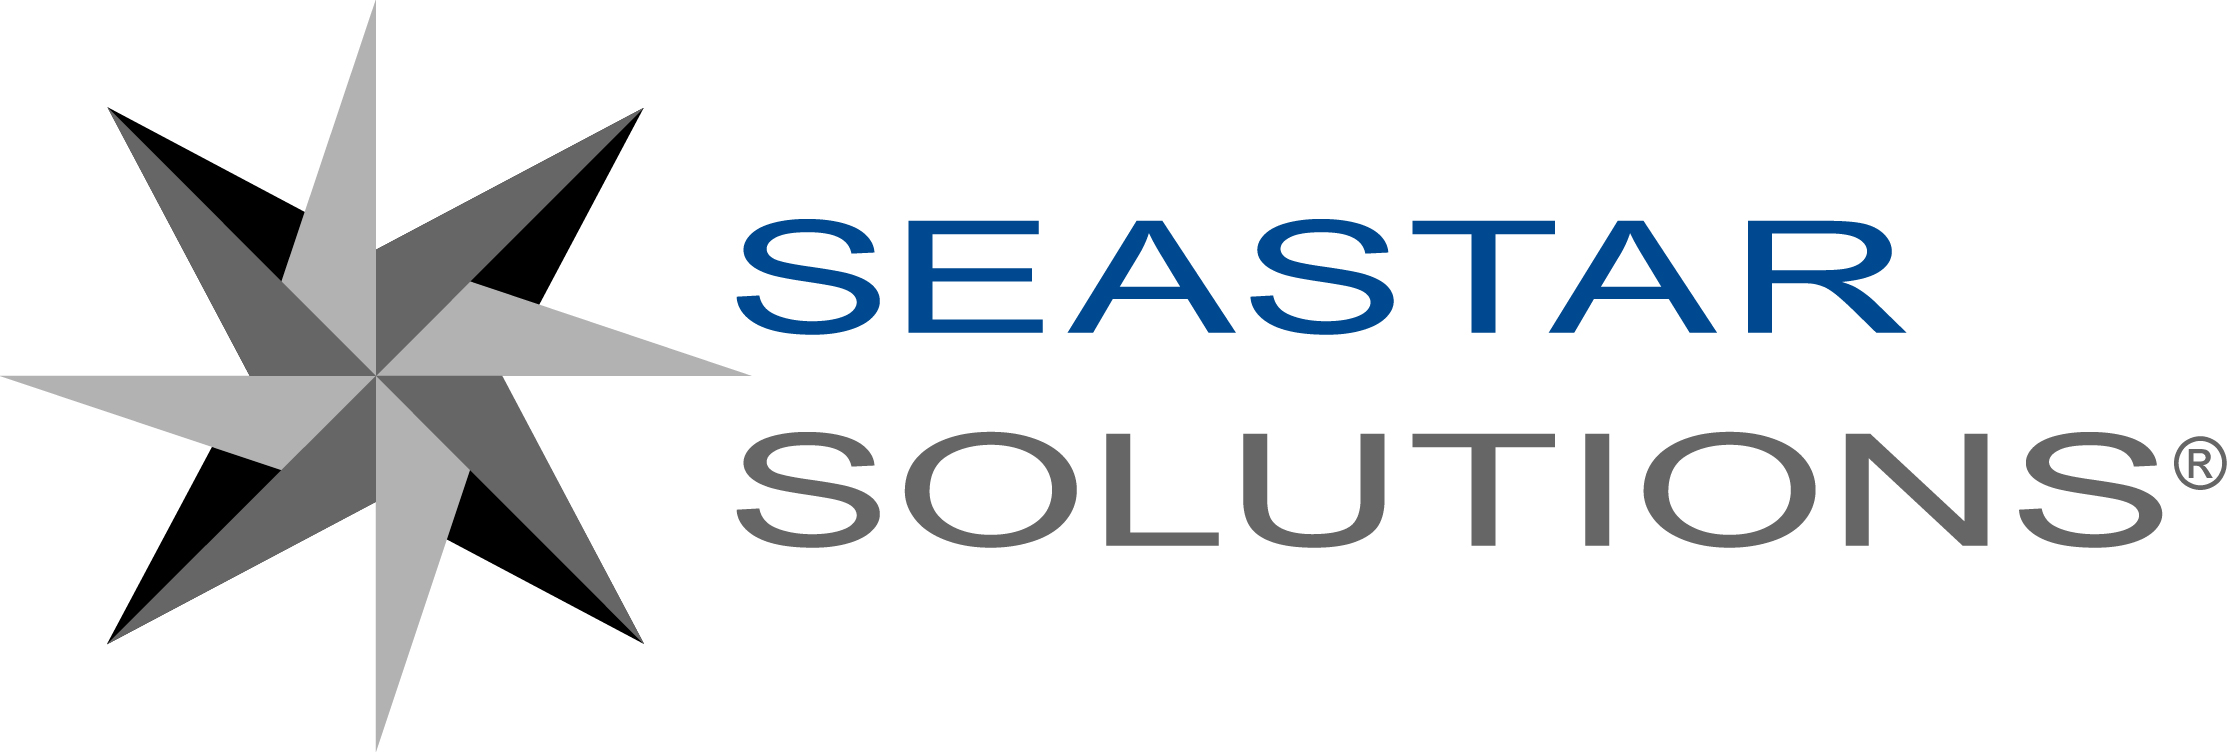 https://scituateboatworks.com/wp-content/uploads/2019/03/SeaStar-Solutions-Logo.jpg